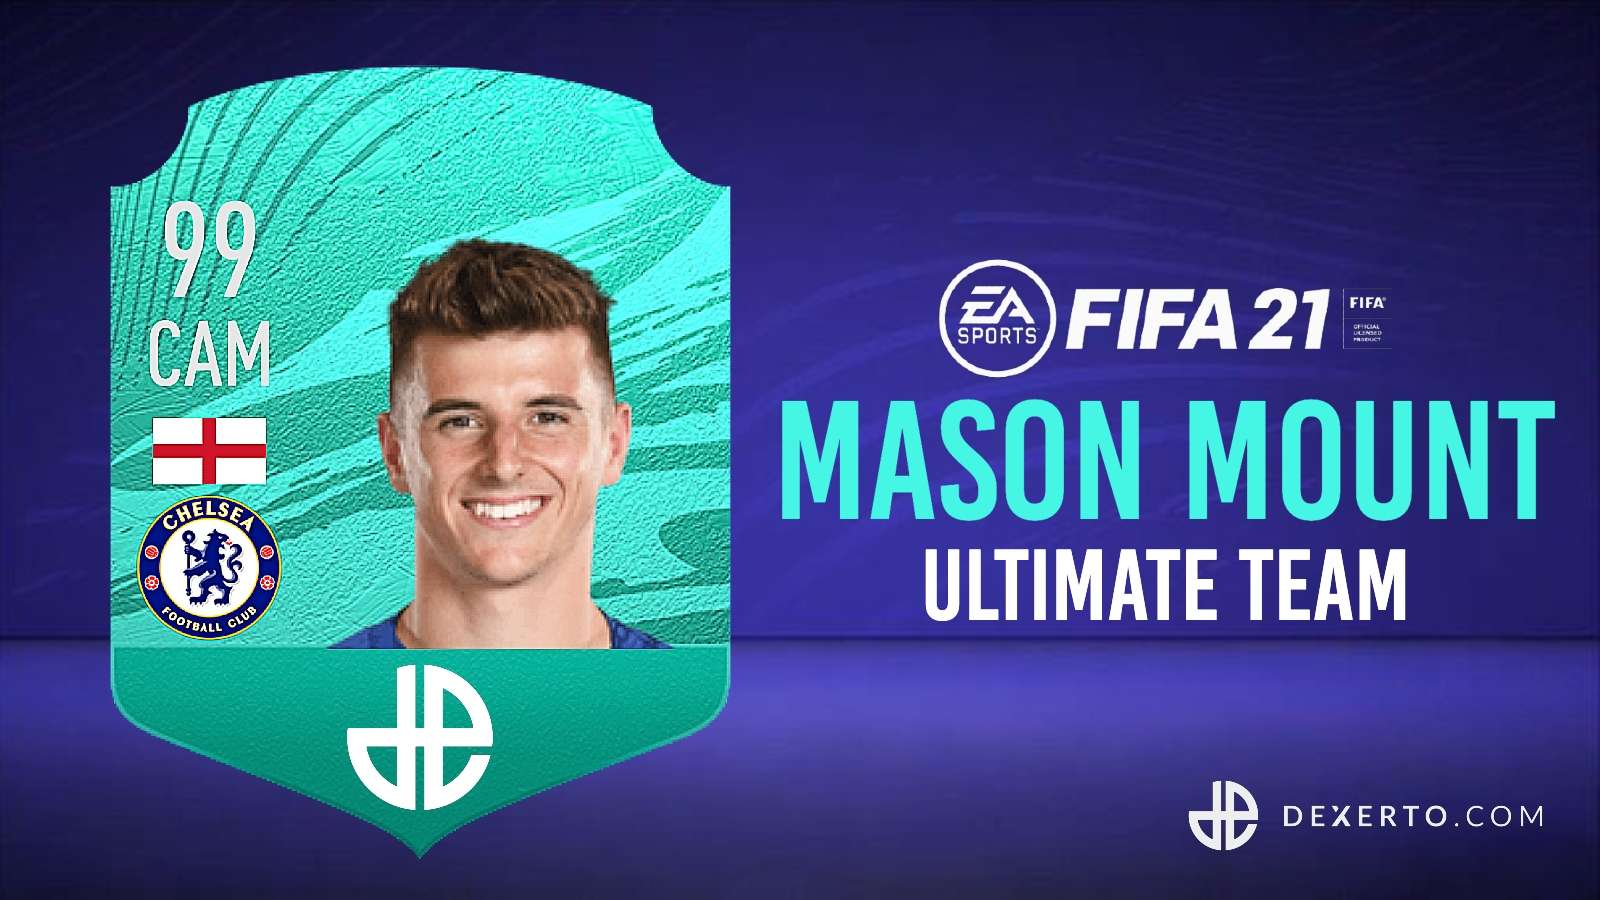 mason mount fifa 21 ultimate team revealed